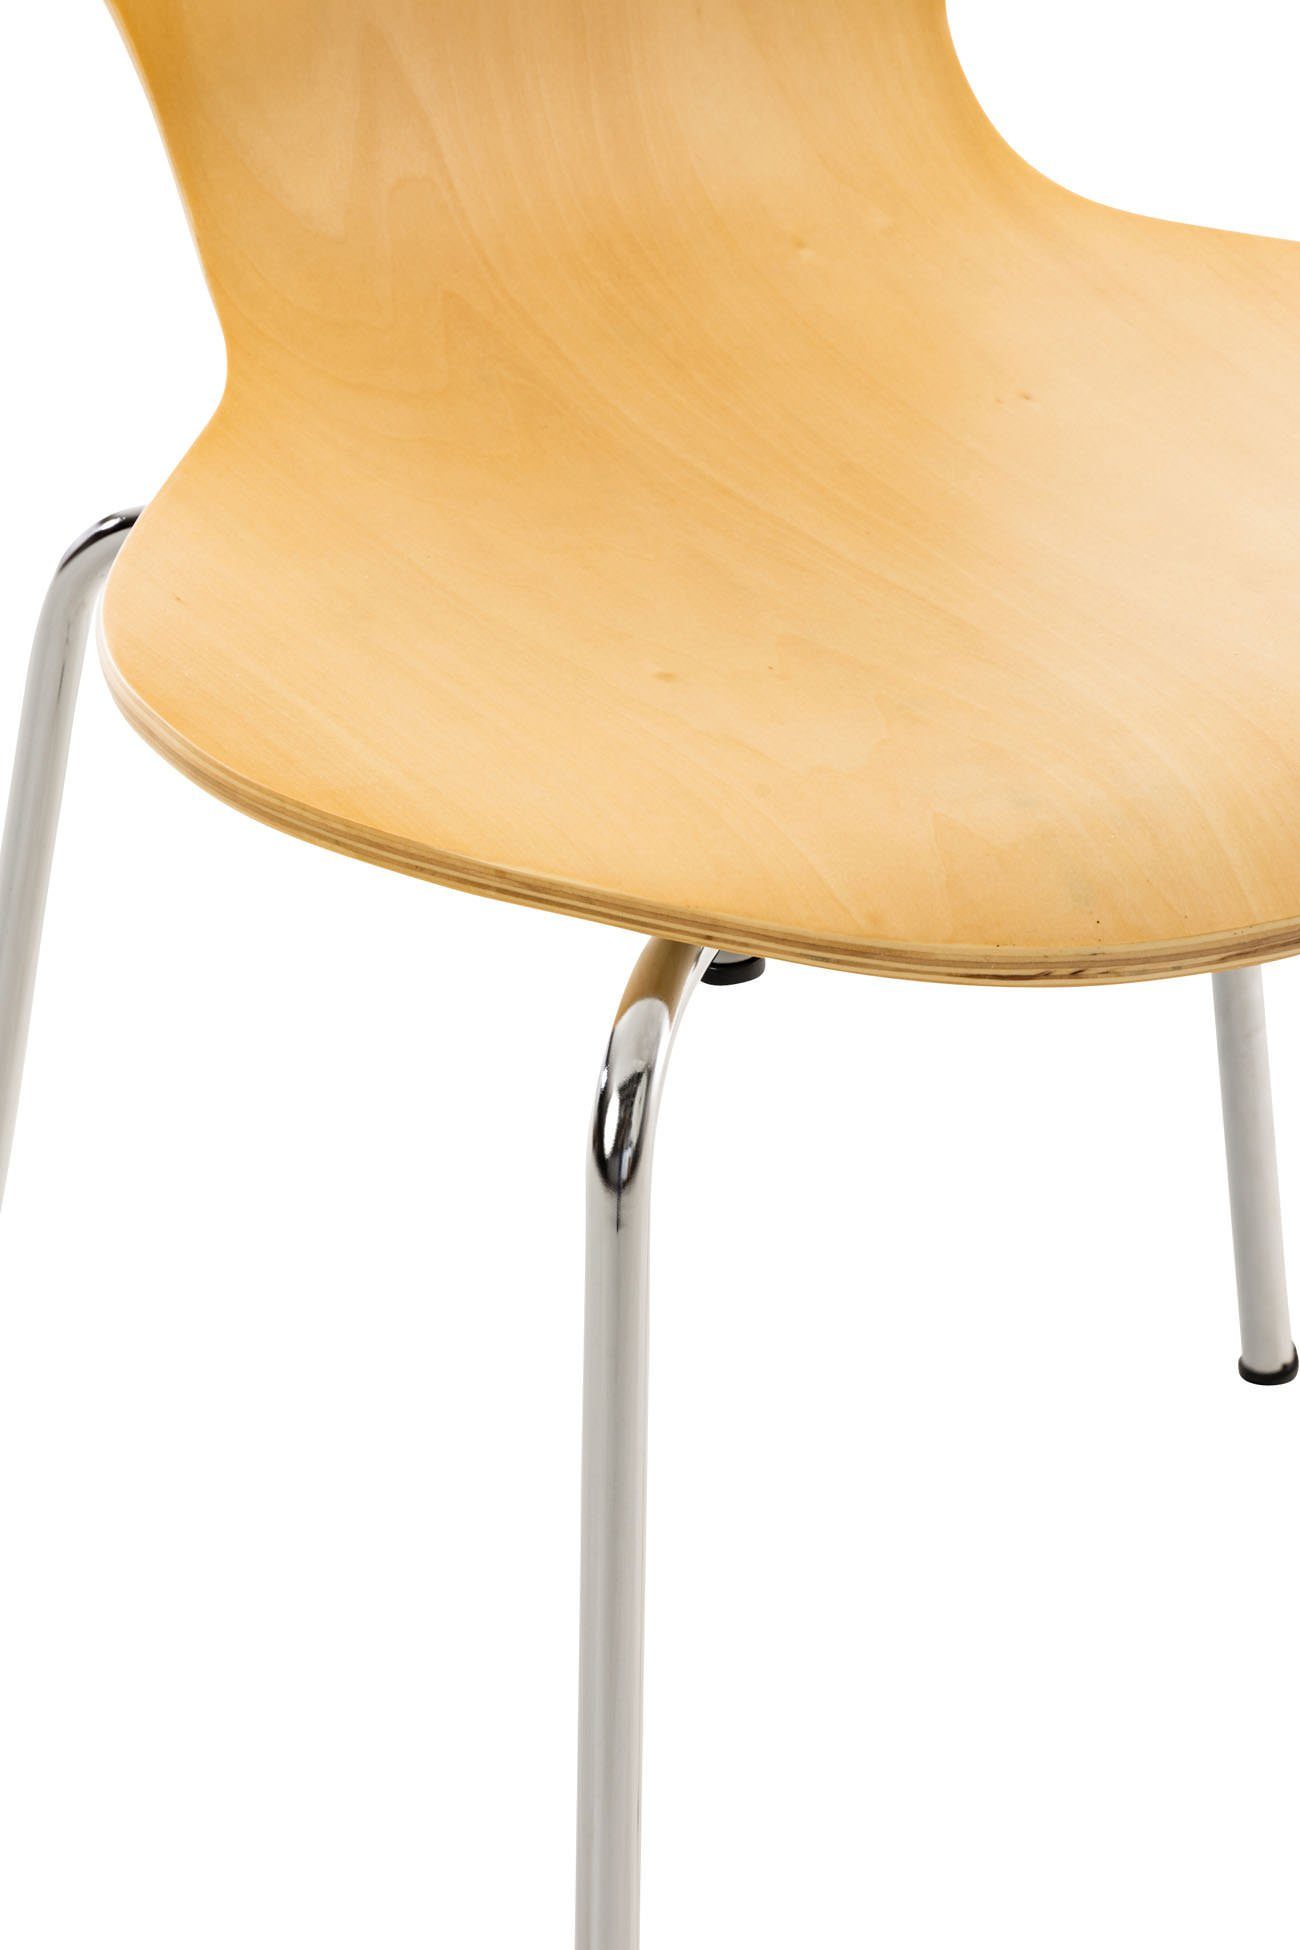 TPFLiving Besucherstuhl Daggy mit ergonomisch - Warteraumstuhl Holz Sitzfläche: (Besprechungsstuhl Sitzfläche Natura - chrom Gestell: - Messestuhl), Konferenzstuhl geformter - Metall